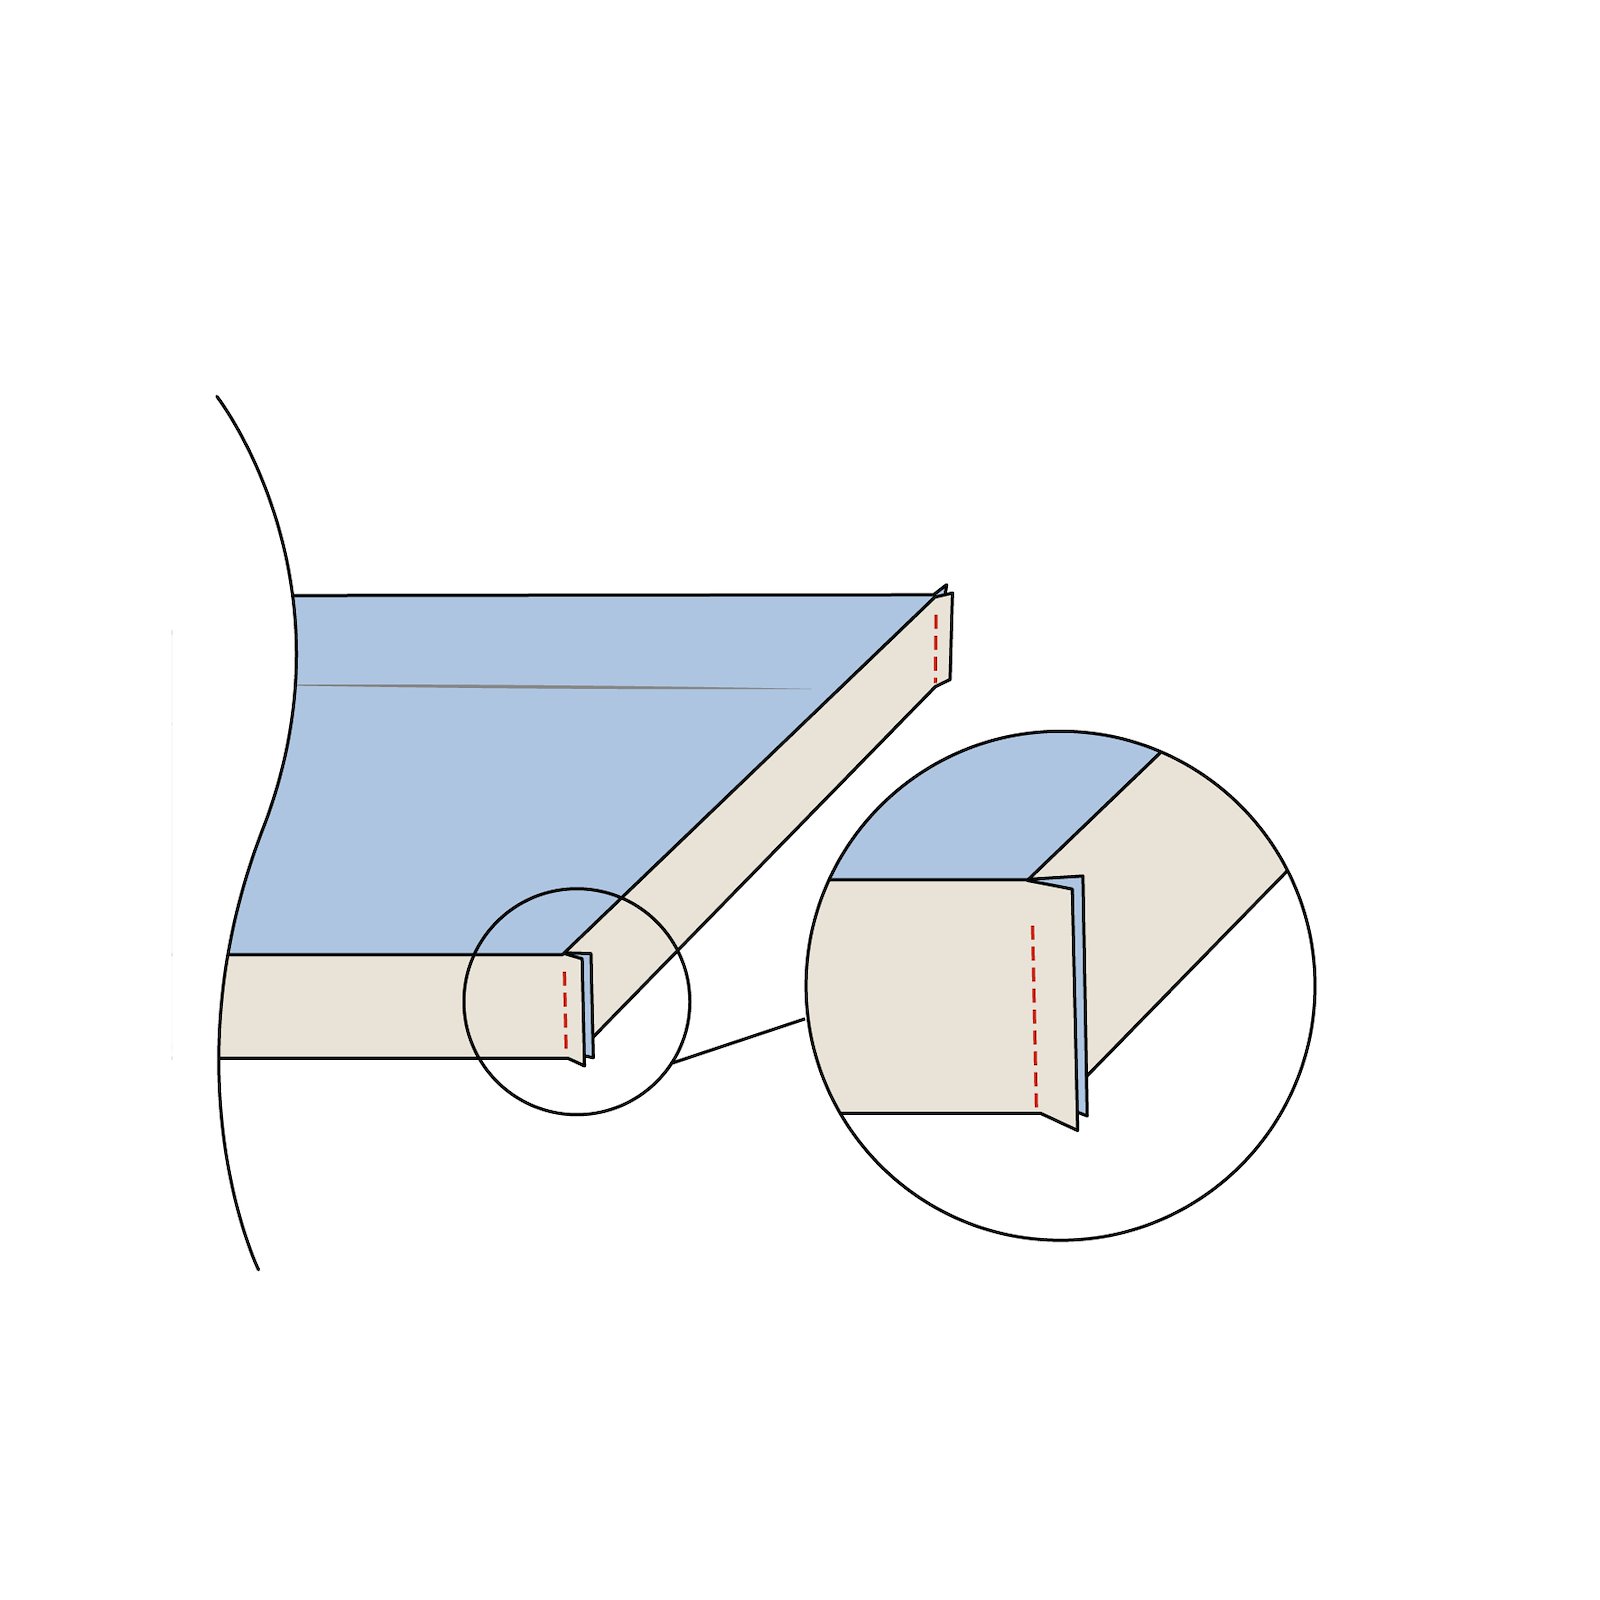 Sewing pattern: Crib bumper Diy3004-step3.jpg